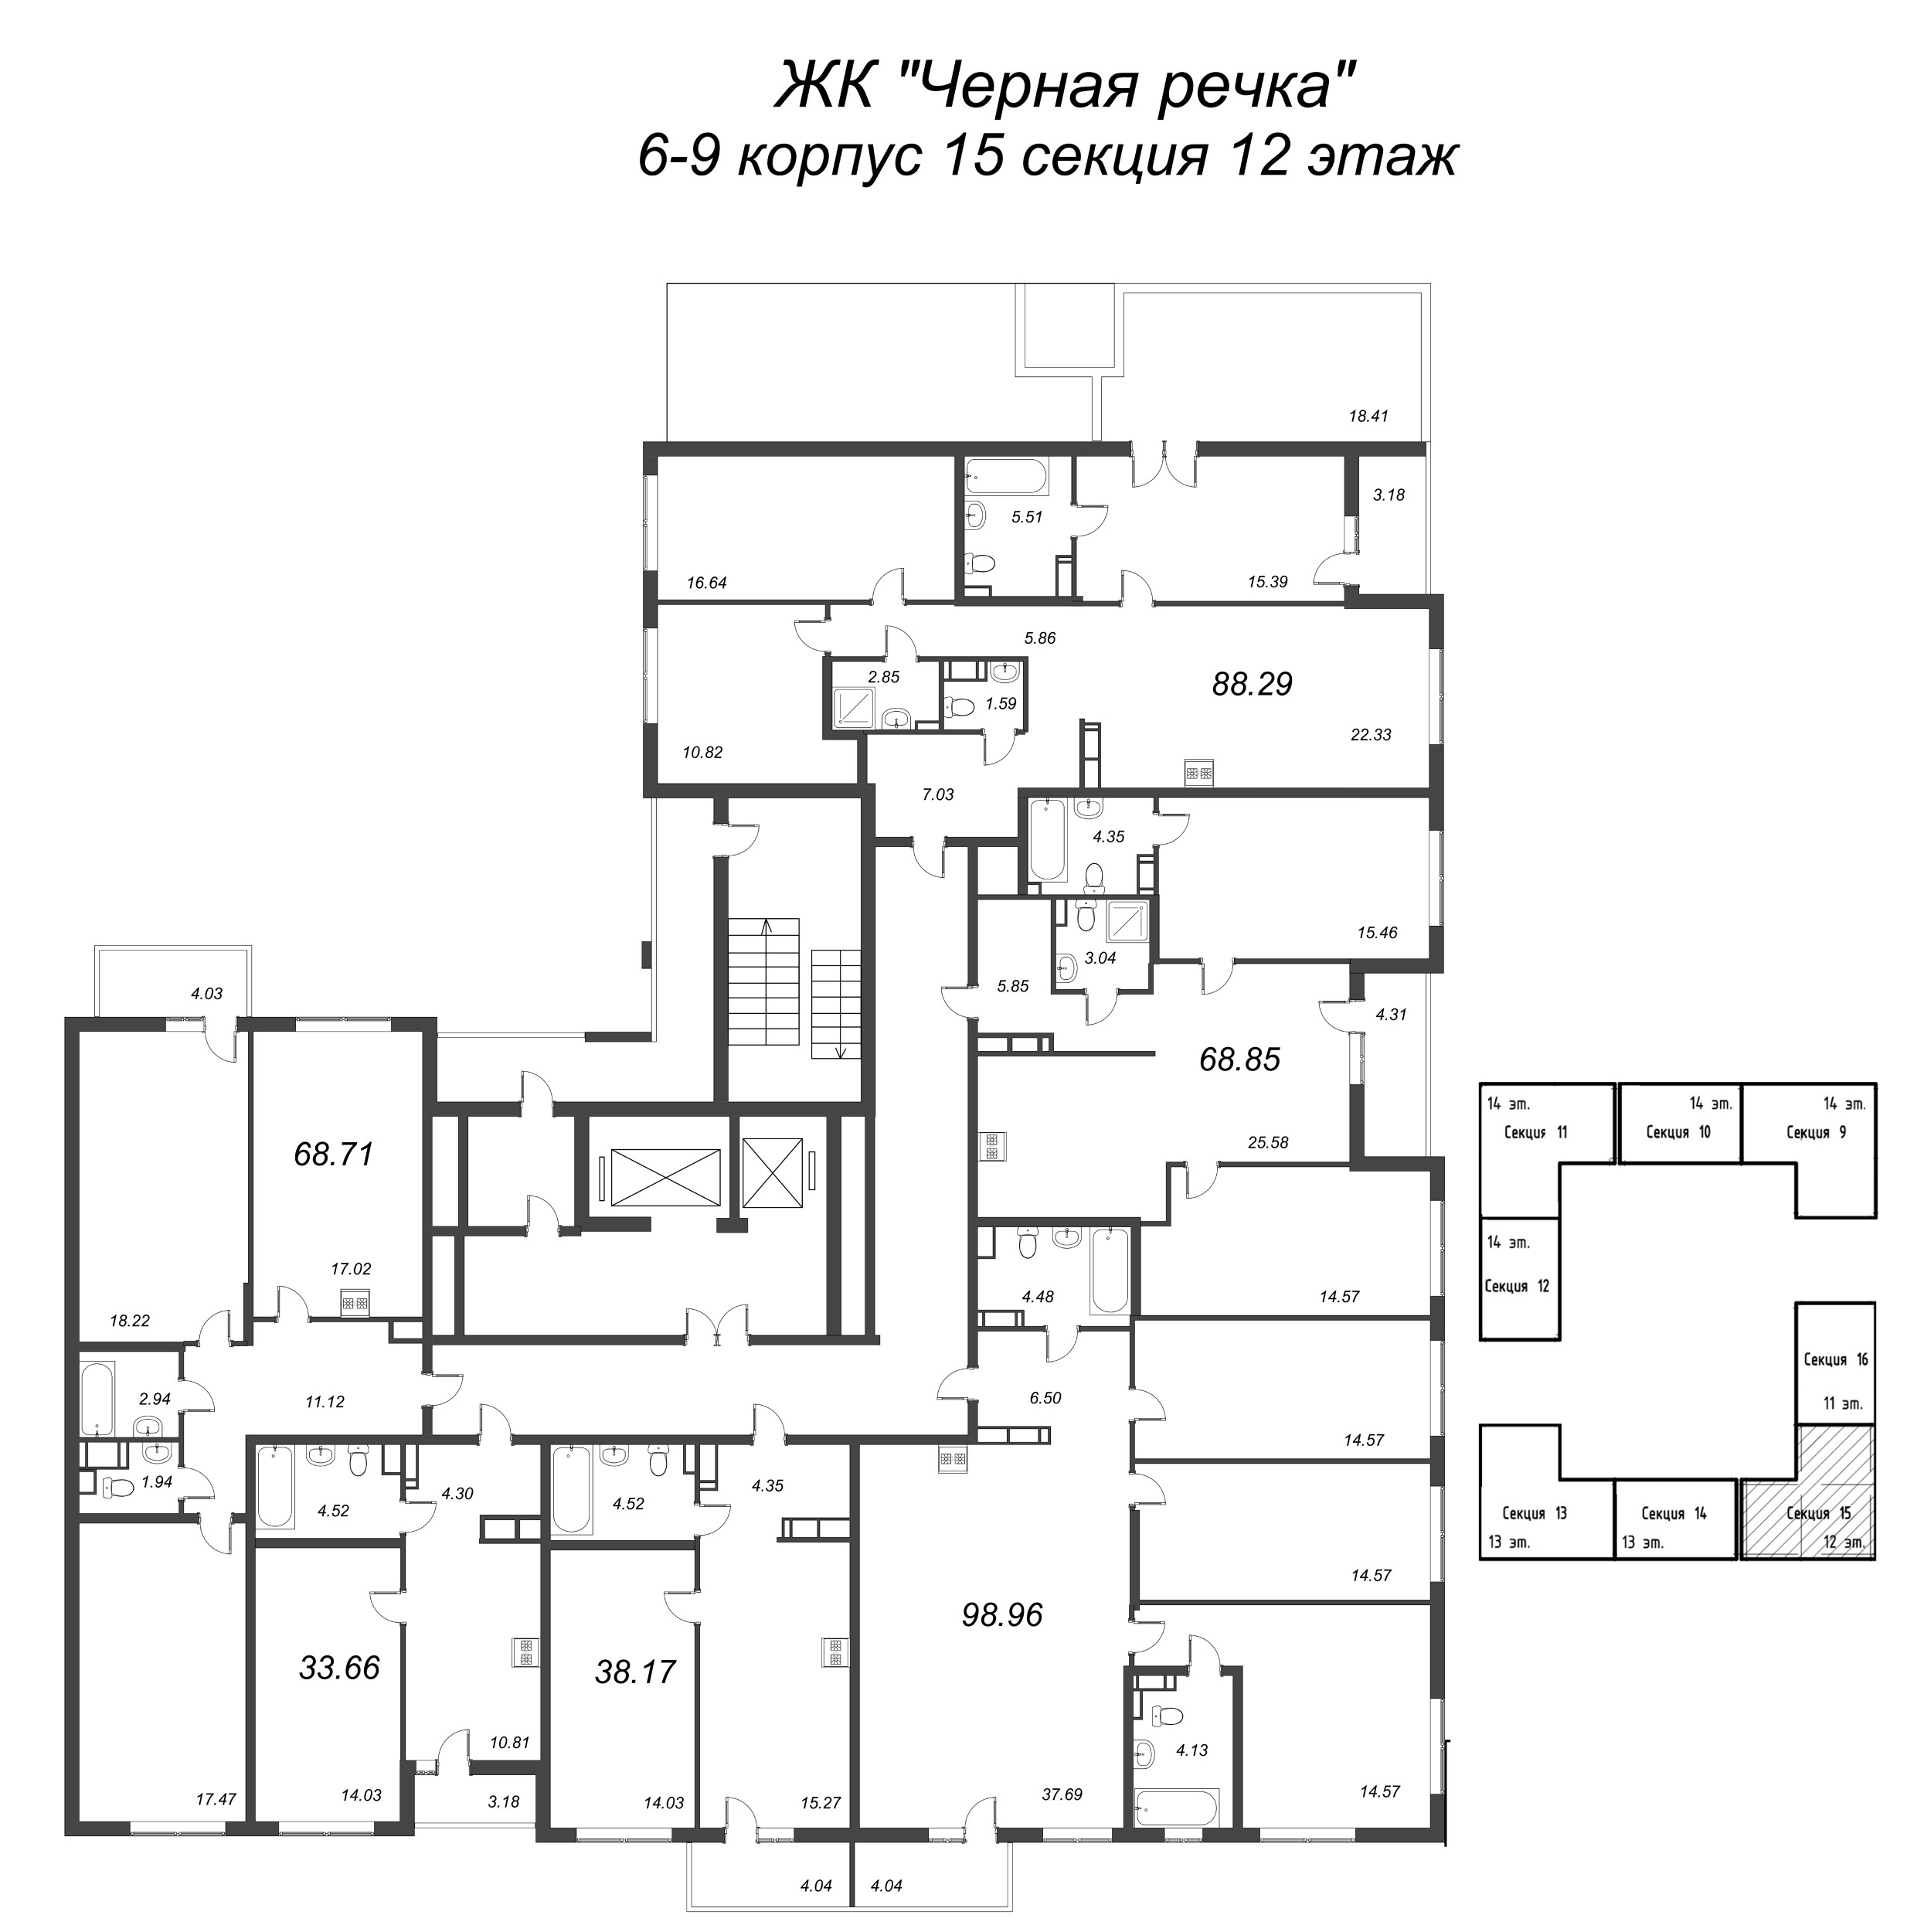 4-комнатная (Евро) квартира, 98.96 м² в ЖК "Чёрная речка от Ильича" - планировка этажа